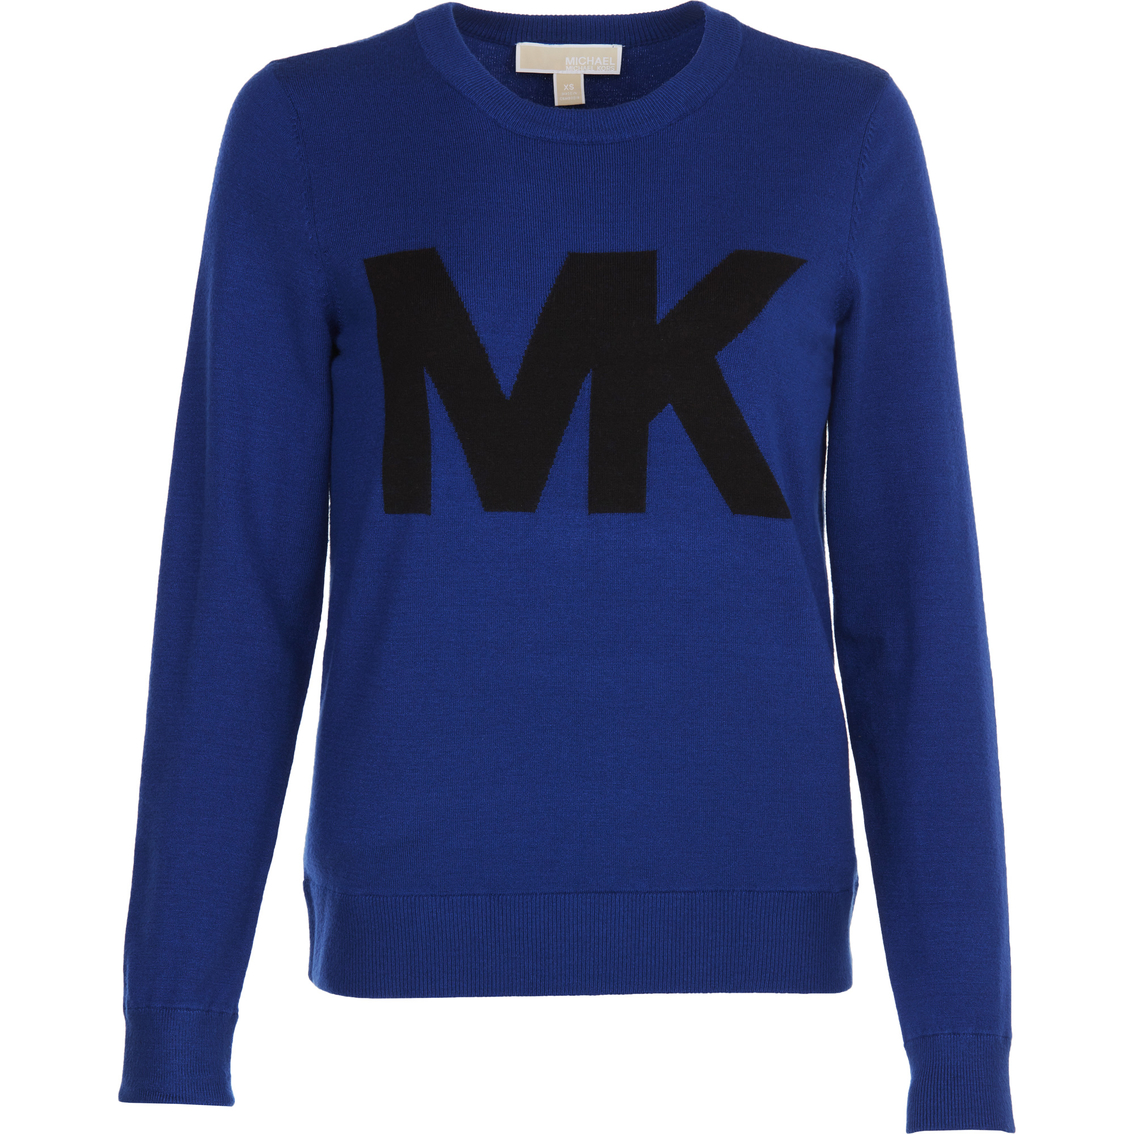 mk clothing